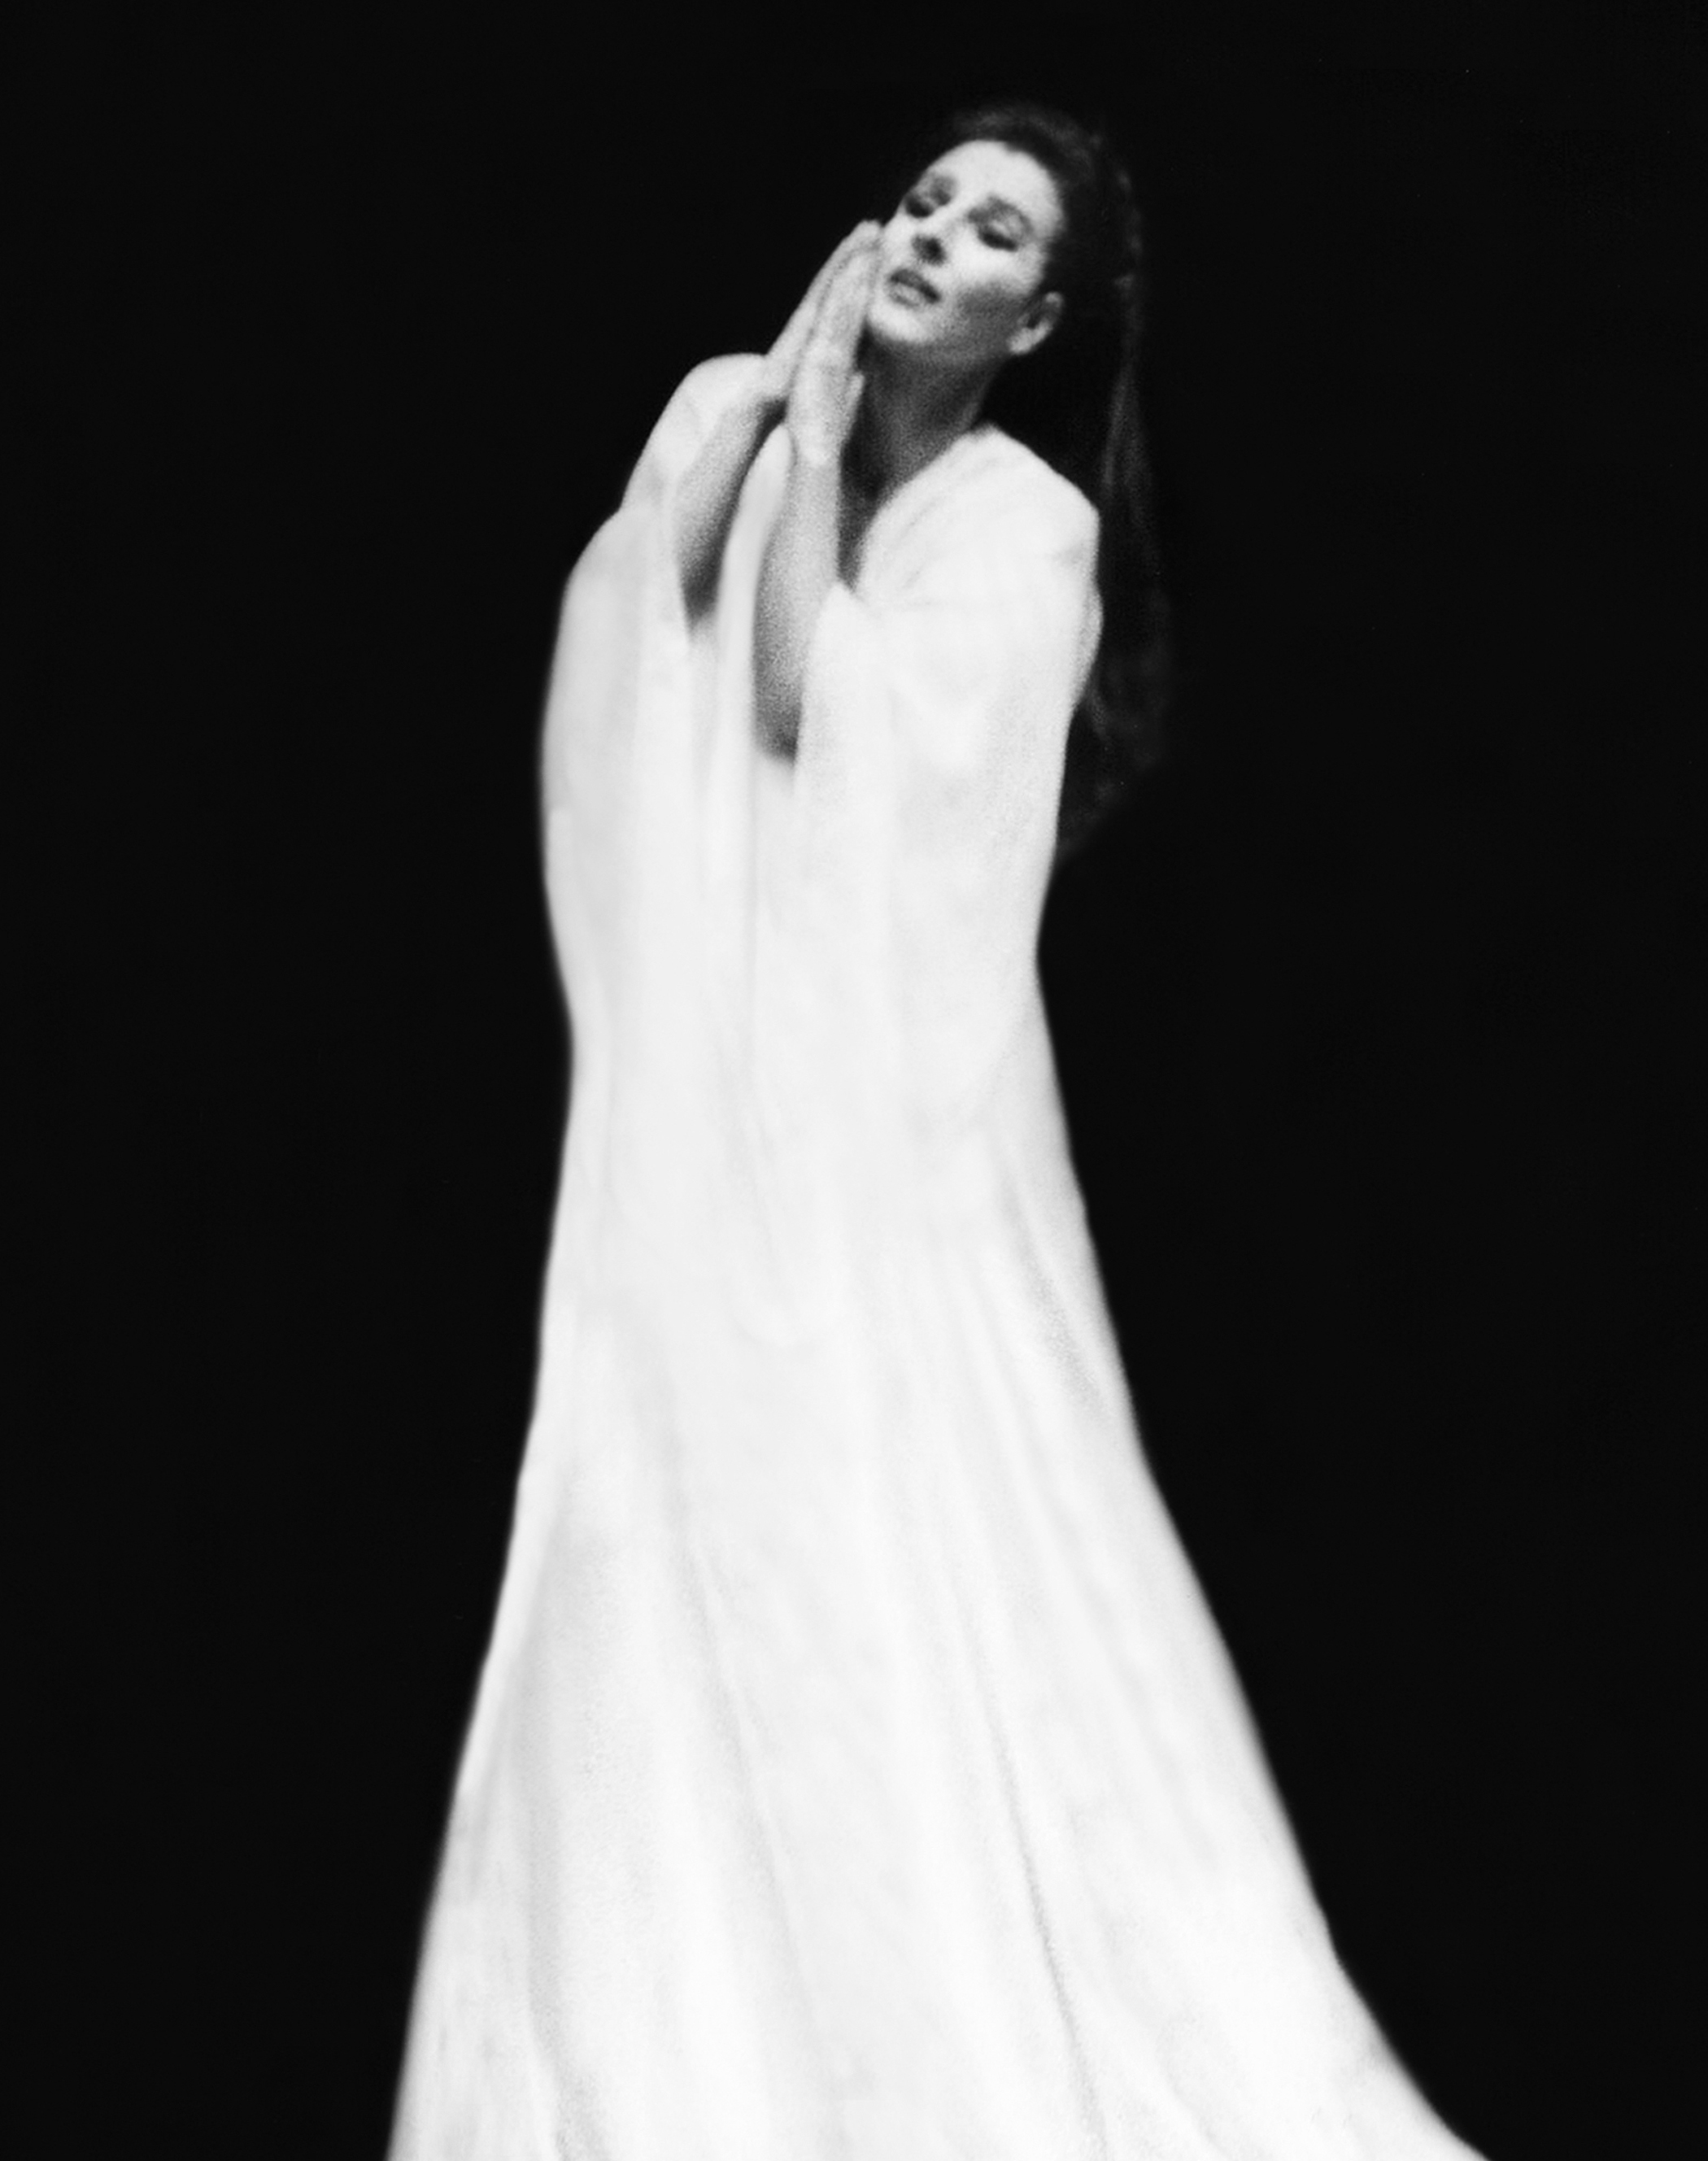 Lucia Aliberti⚘Wiener Staatsoper⚘Vienna⚘Opera⚘"Lucia di Lammermoor"⚘Wien⚘On Stage⚘:http://www.luciaaliberti.it #luciaaliberti #wienerstaatsoper #vienna #luciadilammermoor #opera #wien #onstage